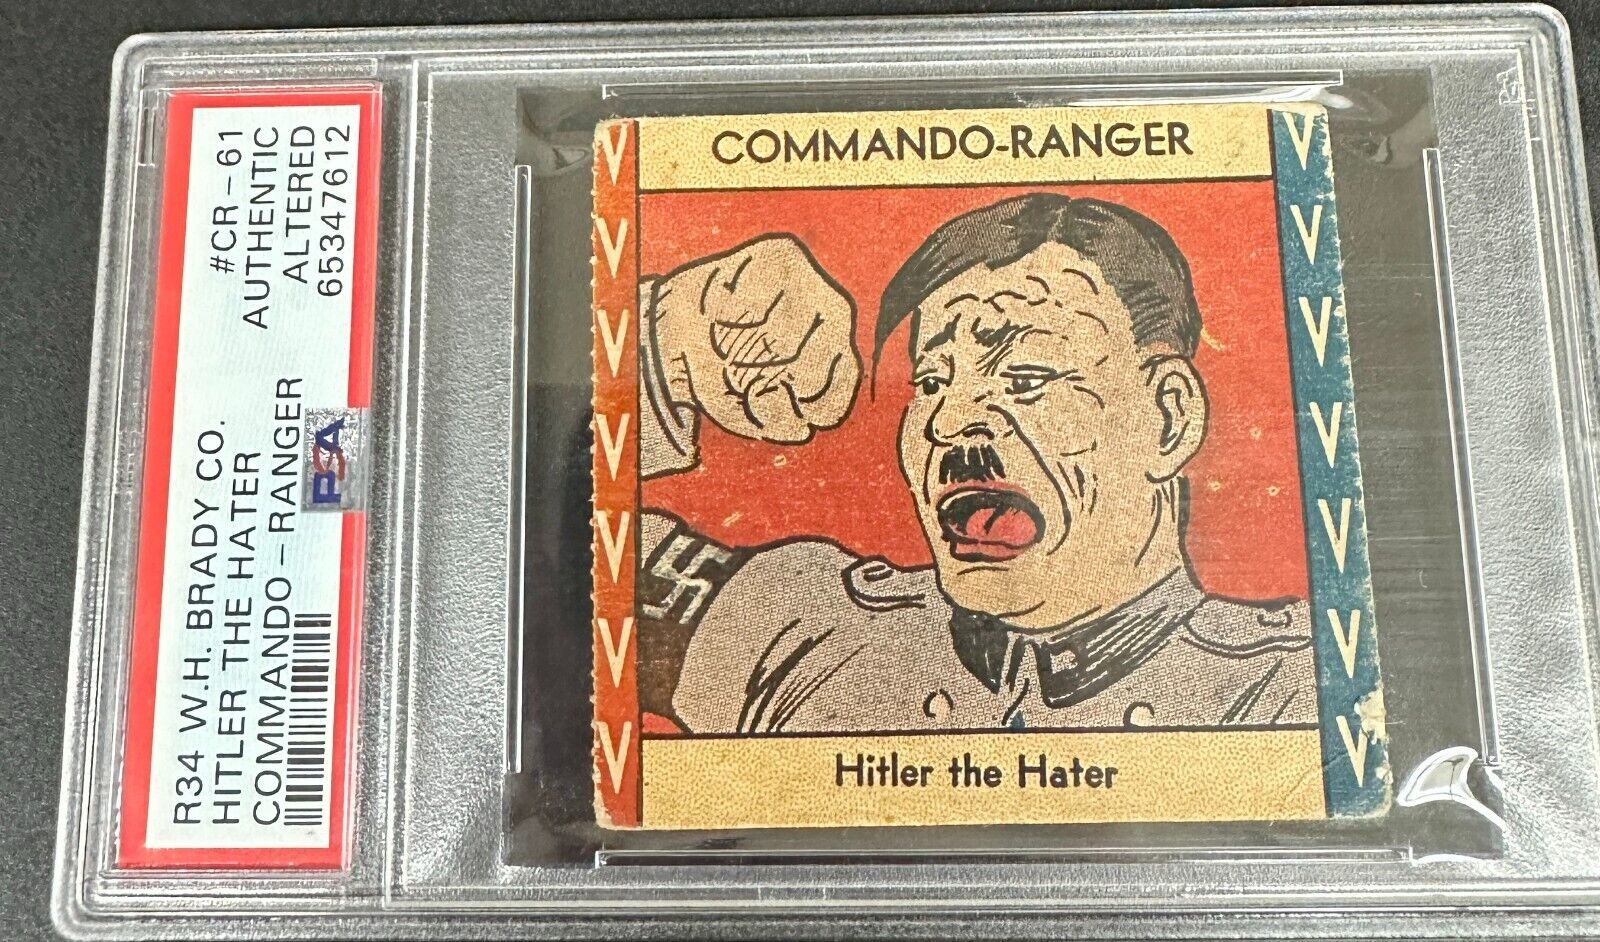 1940 R34 W.H. Brady Co. Commando-Ranger - Hitler The Hater PSA Authentic